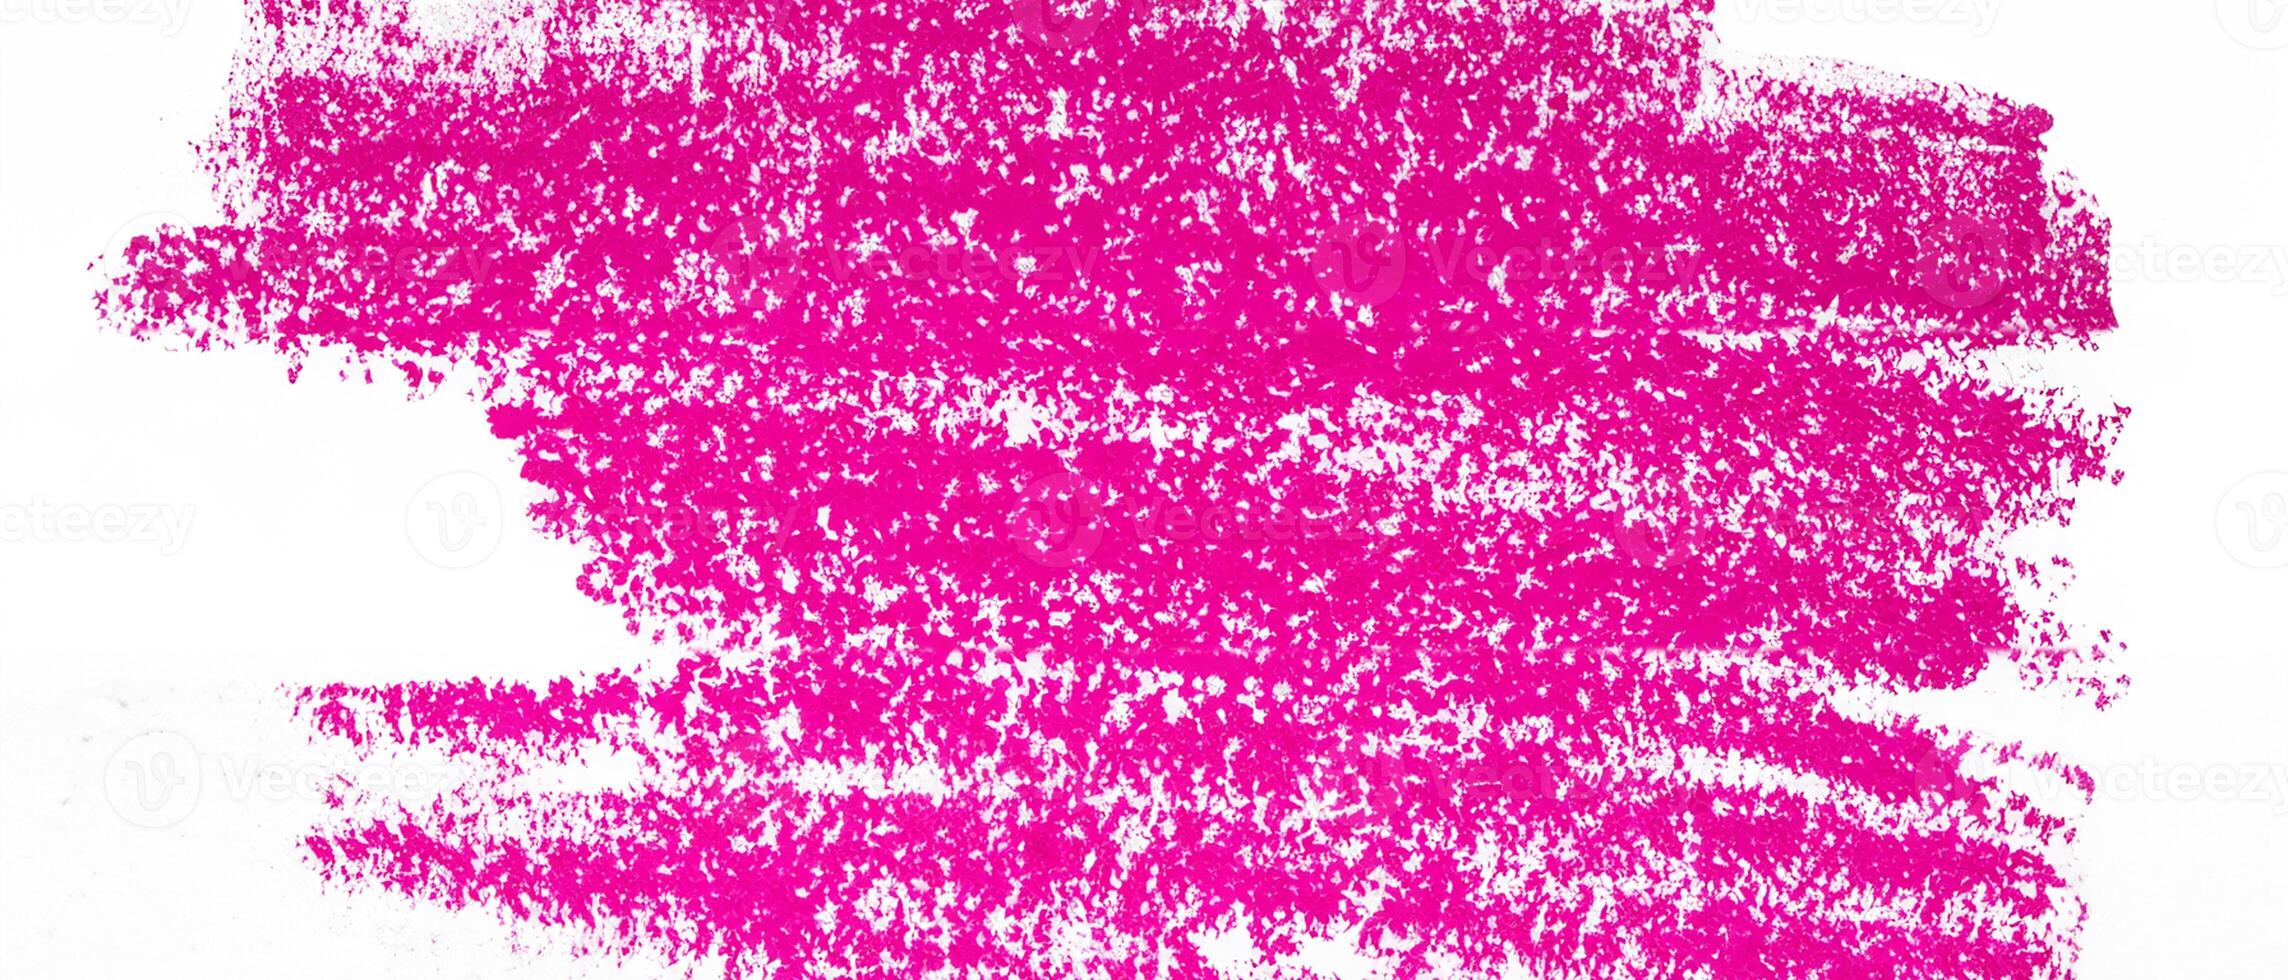 mjuk pastell rosa krita stroke bakgrund med vit accent, kreativ design element. foto